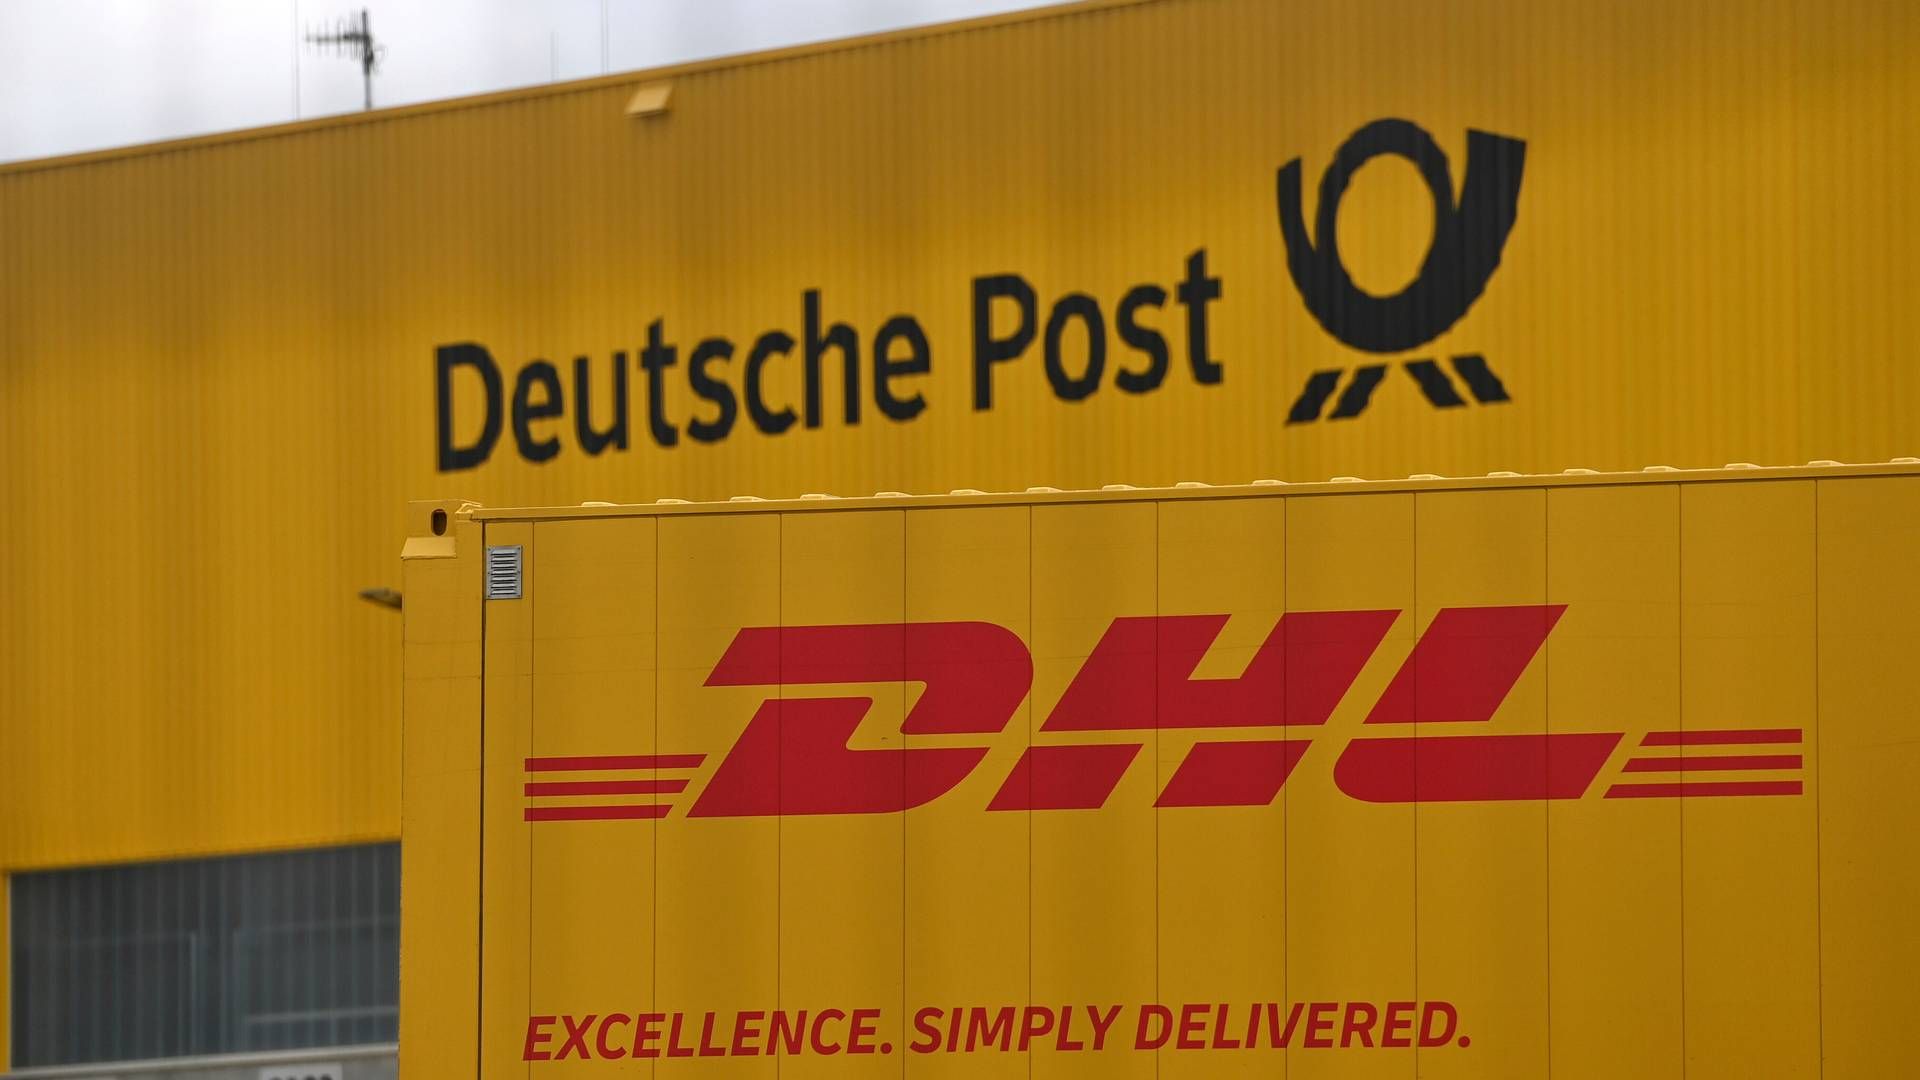 Tyskland vil sælge ud af Deutsche Post. | Foto: Frank Hoermann/AP/Ritzau Scanpix